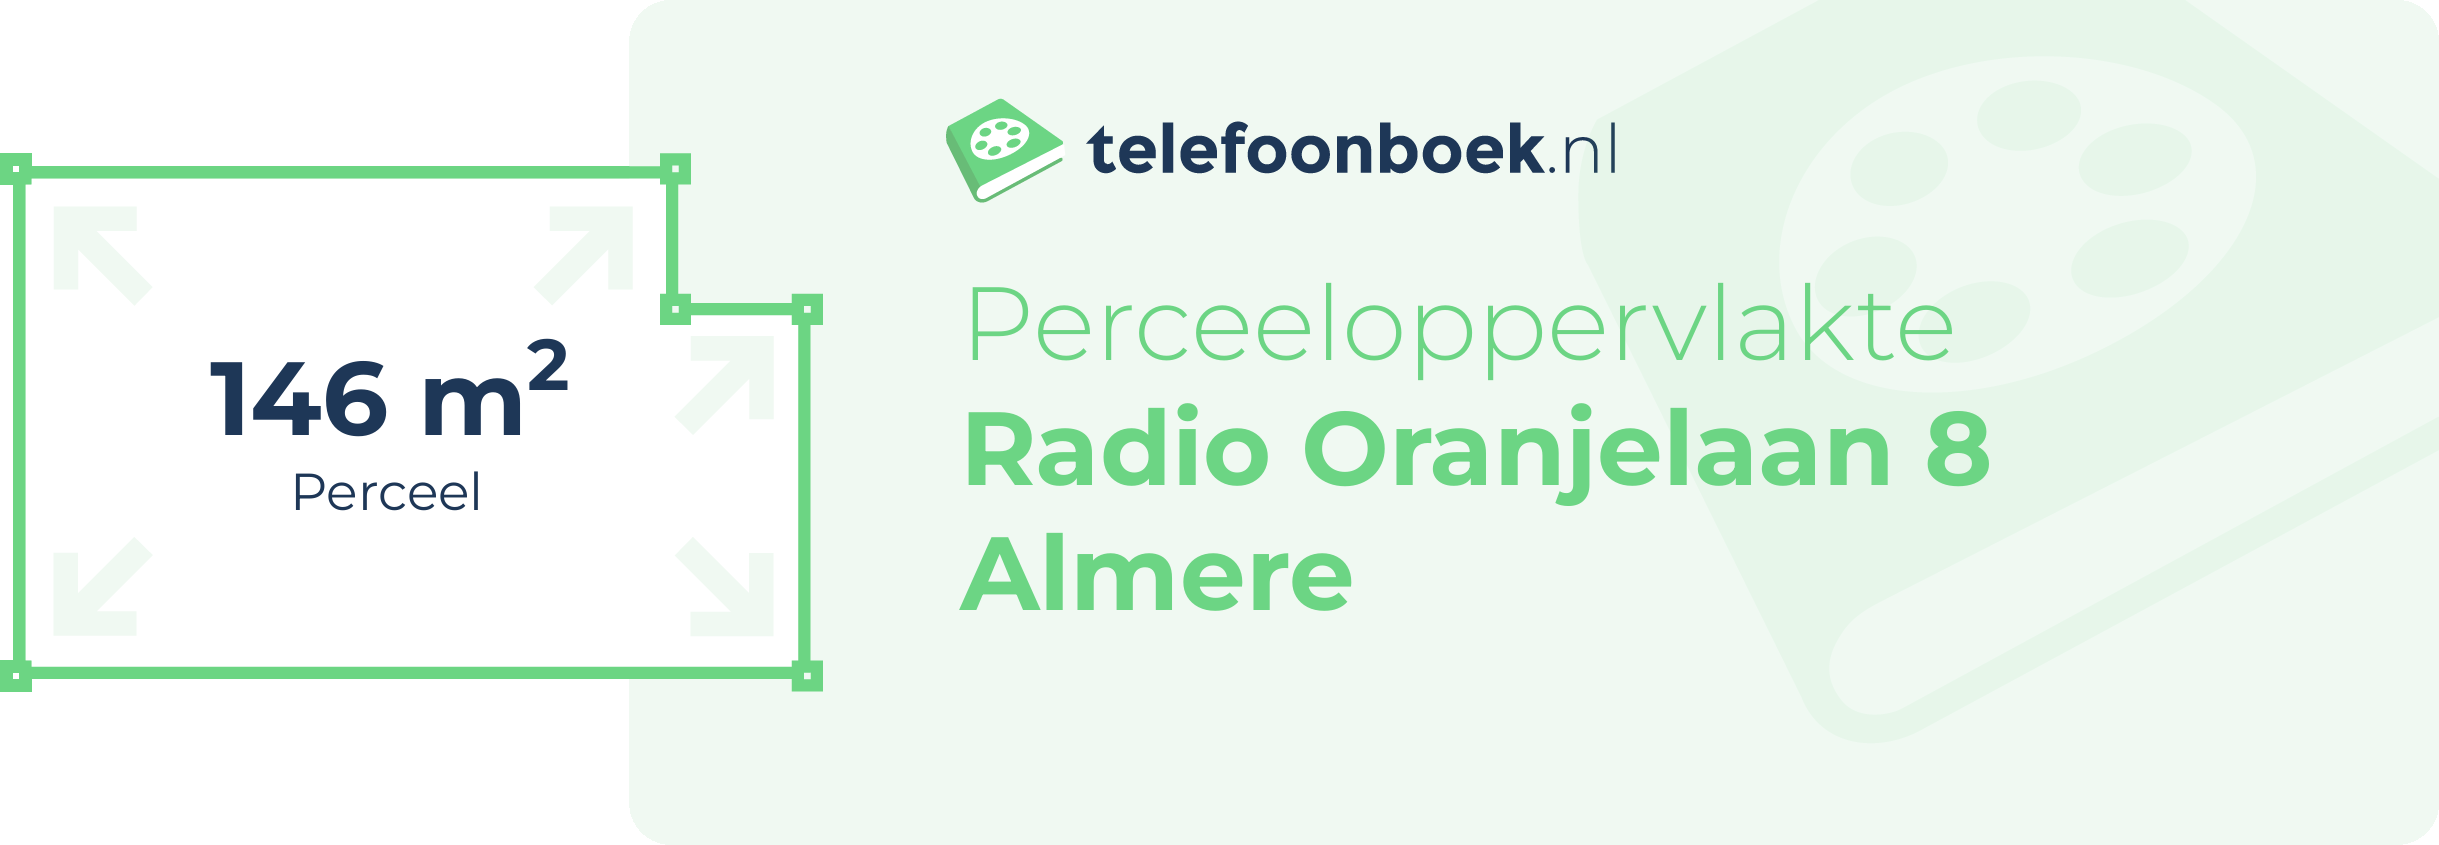 Perceeloppervlakte Radio Oranjelaan 8 Almere